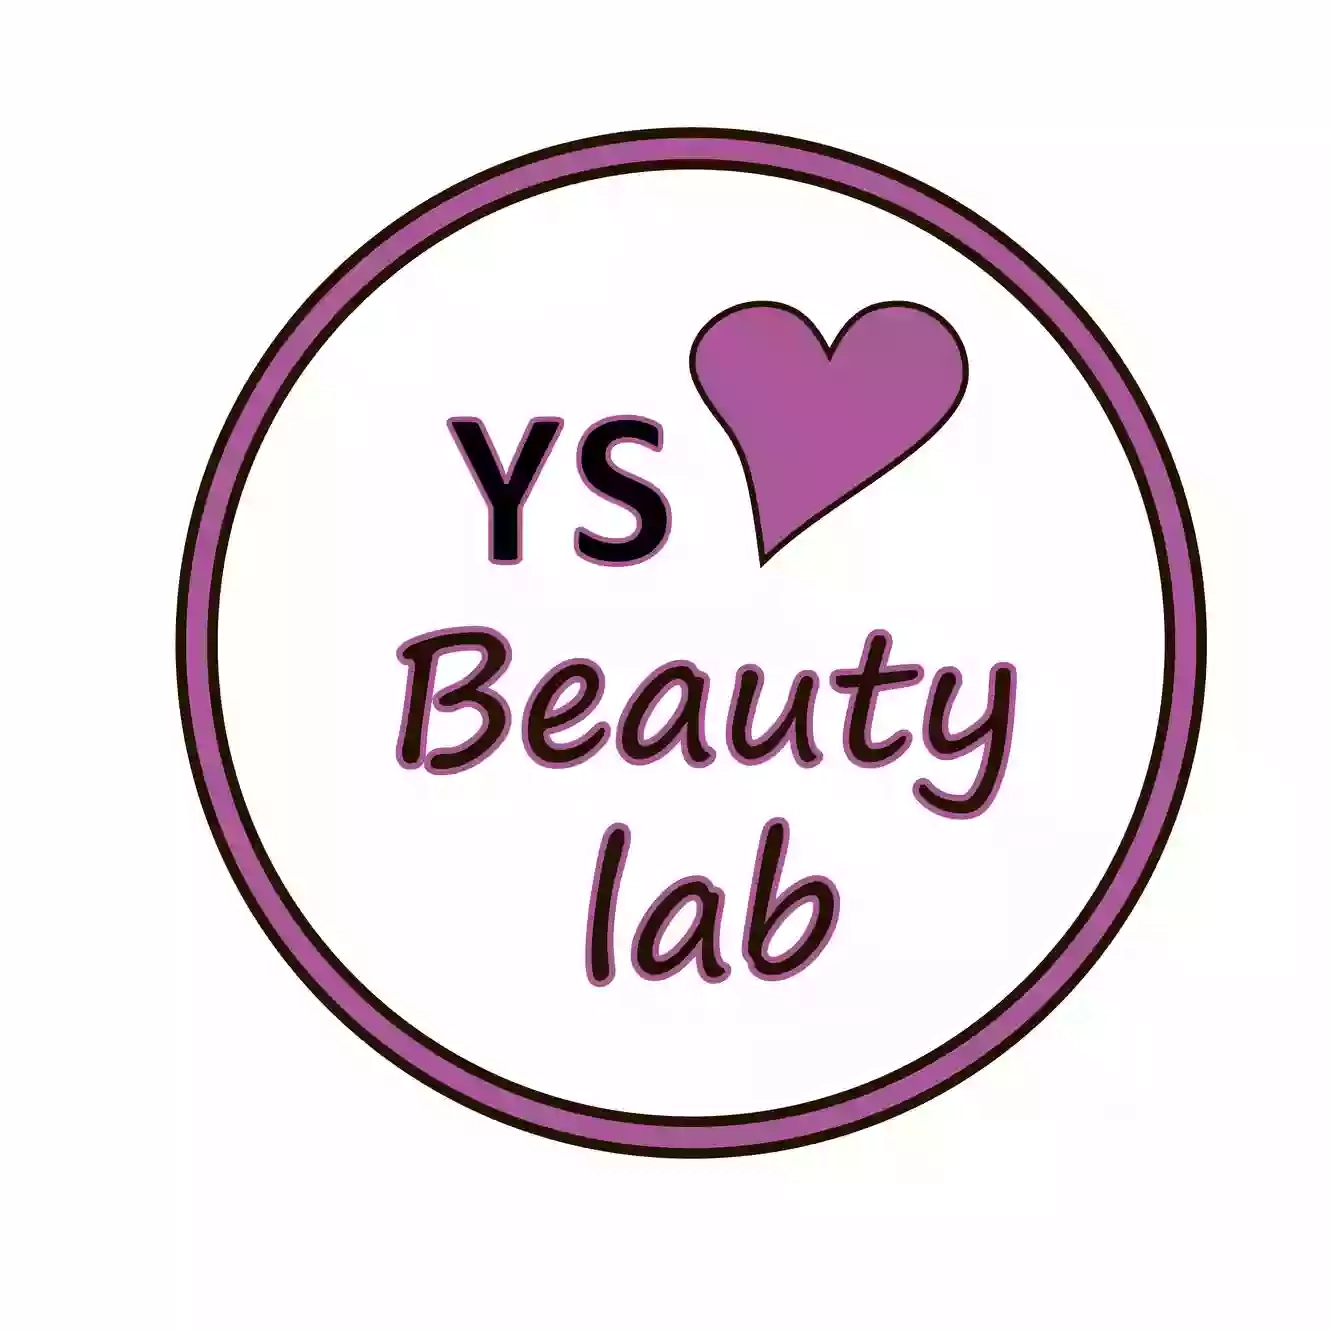 Салон красоты "YS Beauty lab"